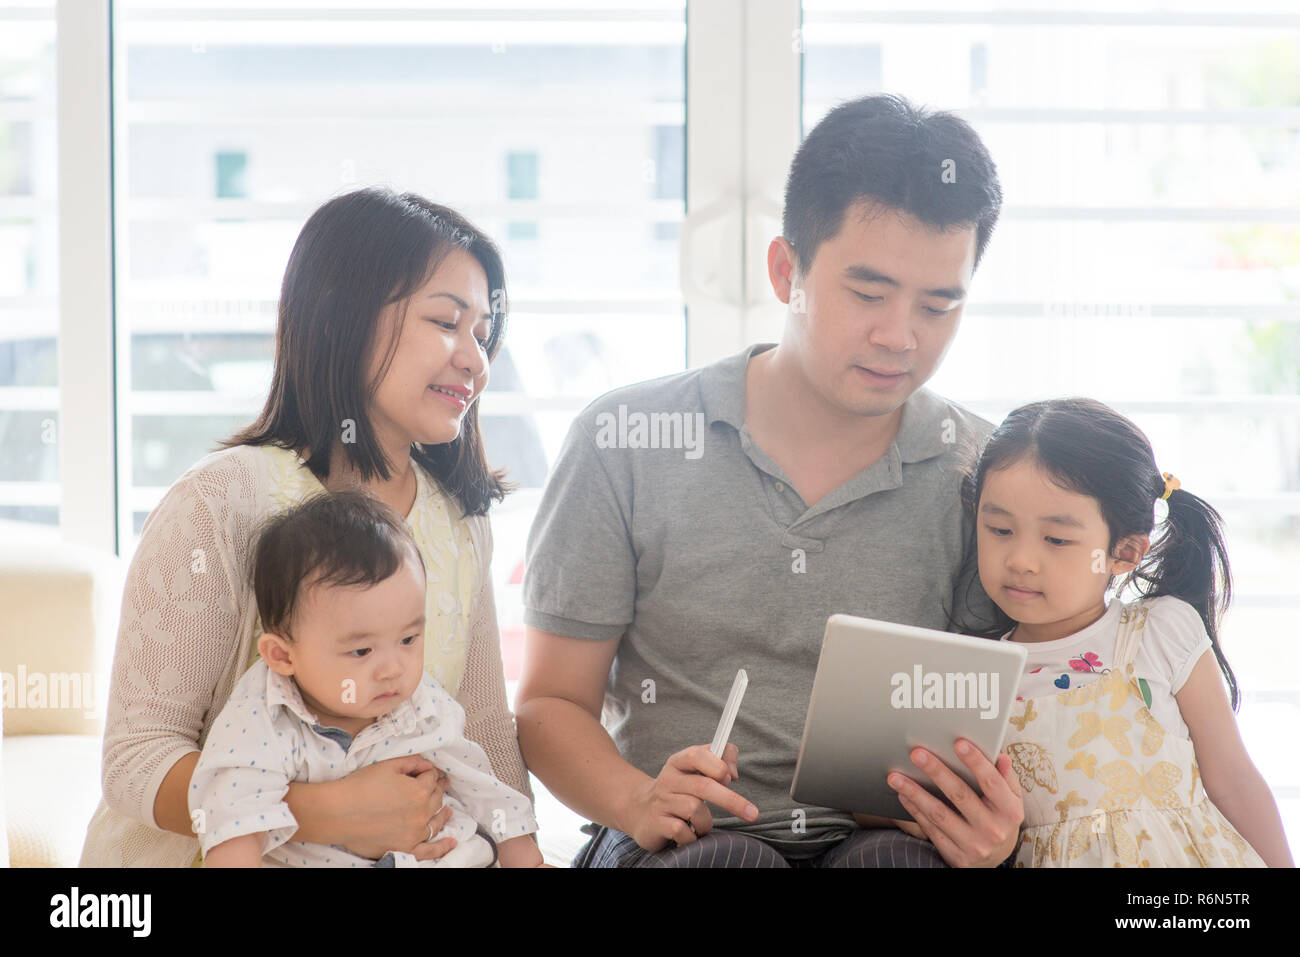 Asiatische Menschen scannen QR-Code Stockfoto